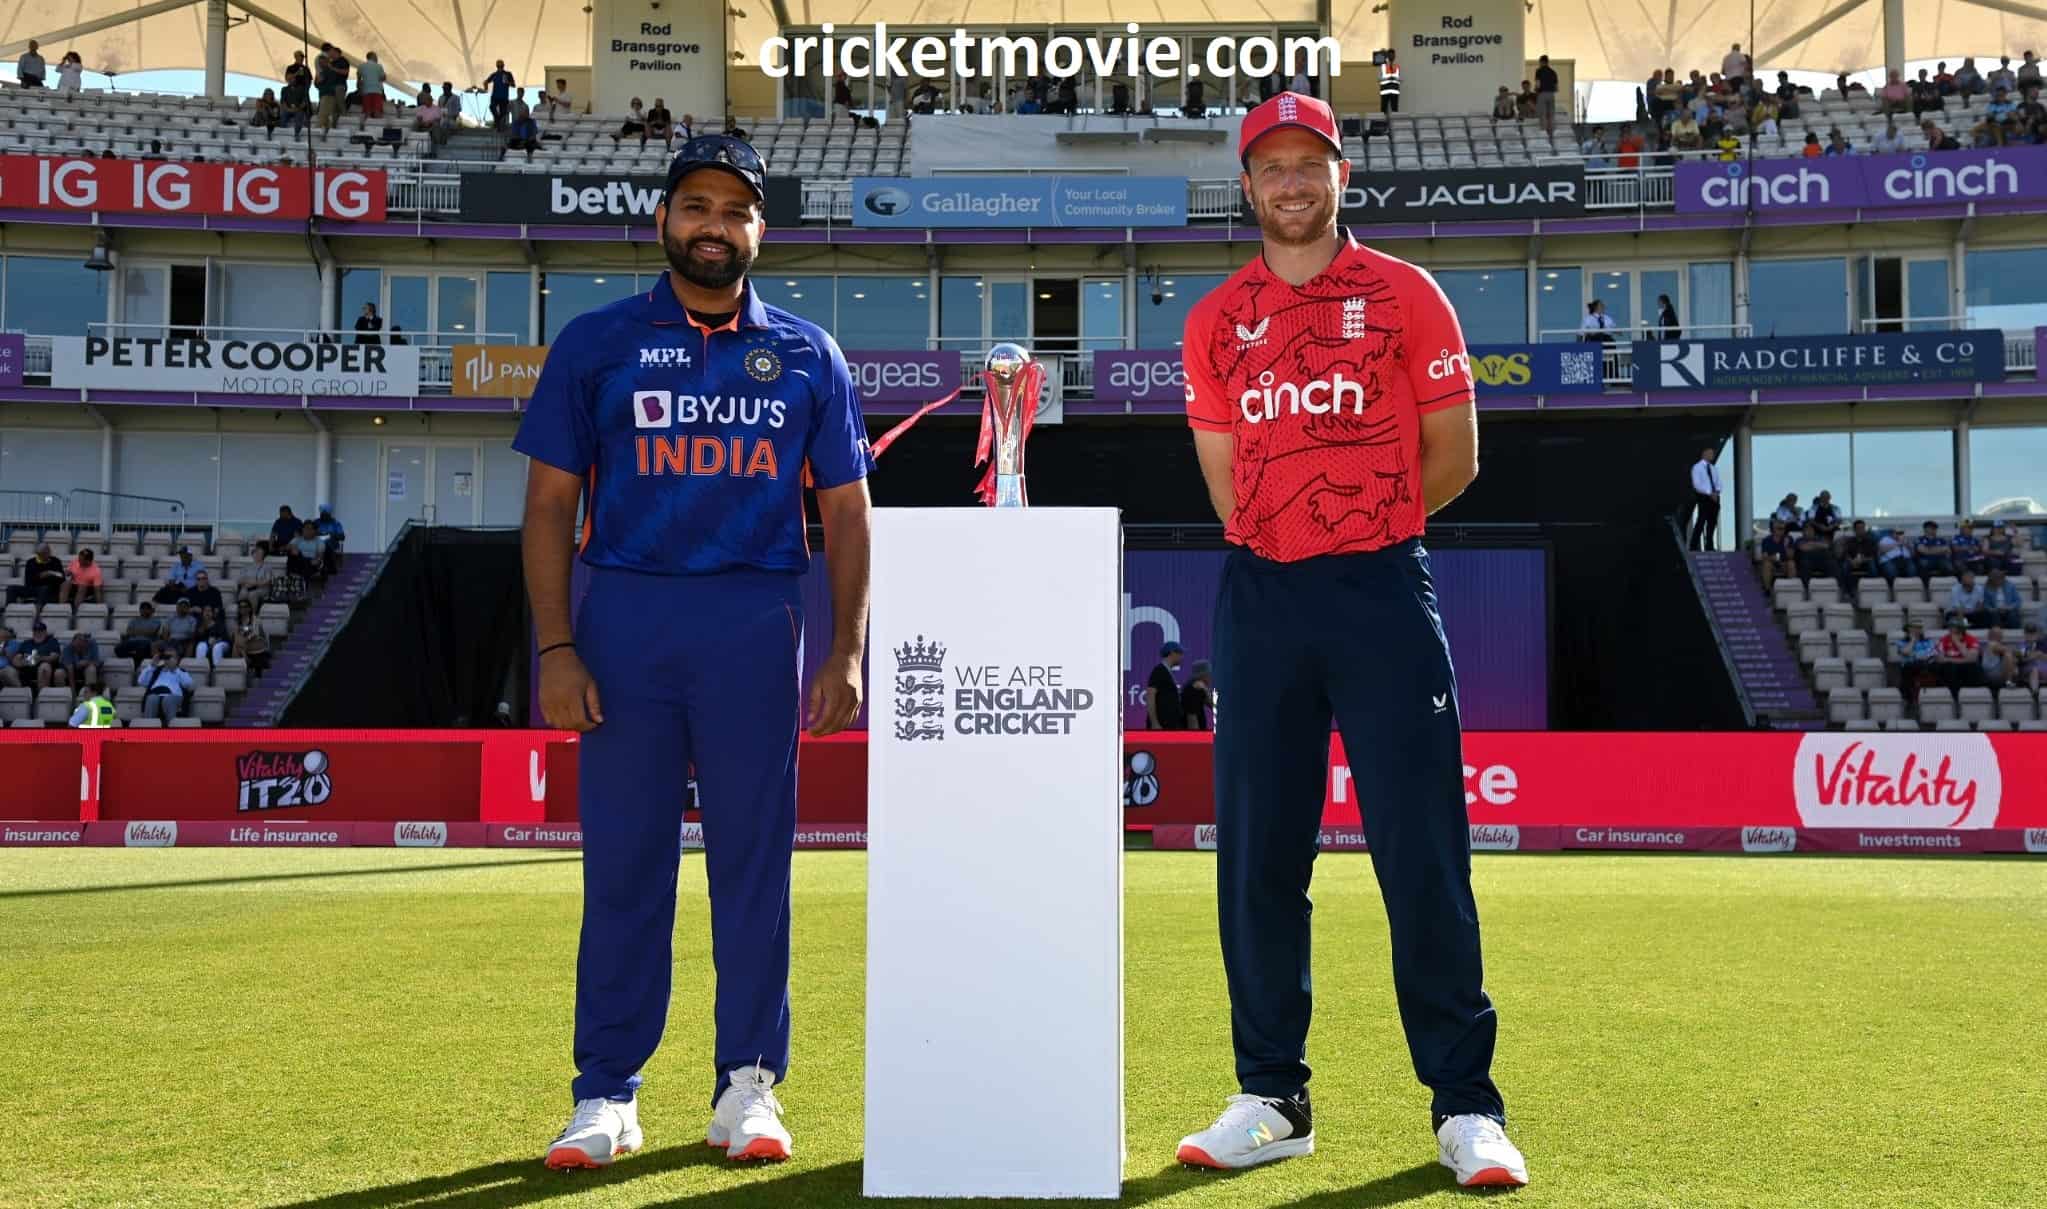 India beat England in the 1st T20-cricketmovie.com